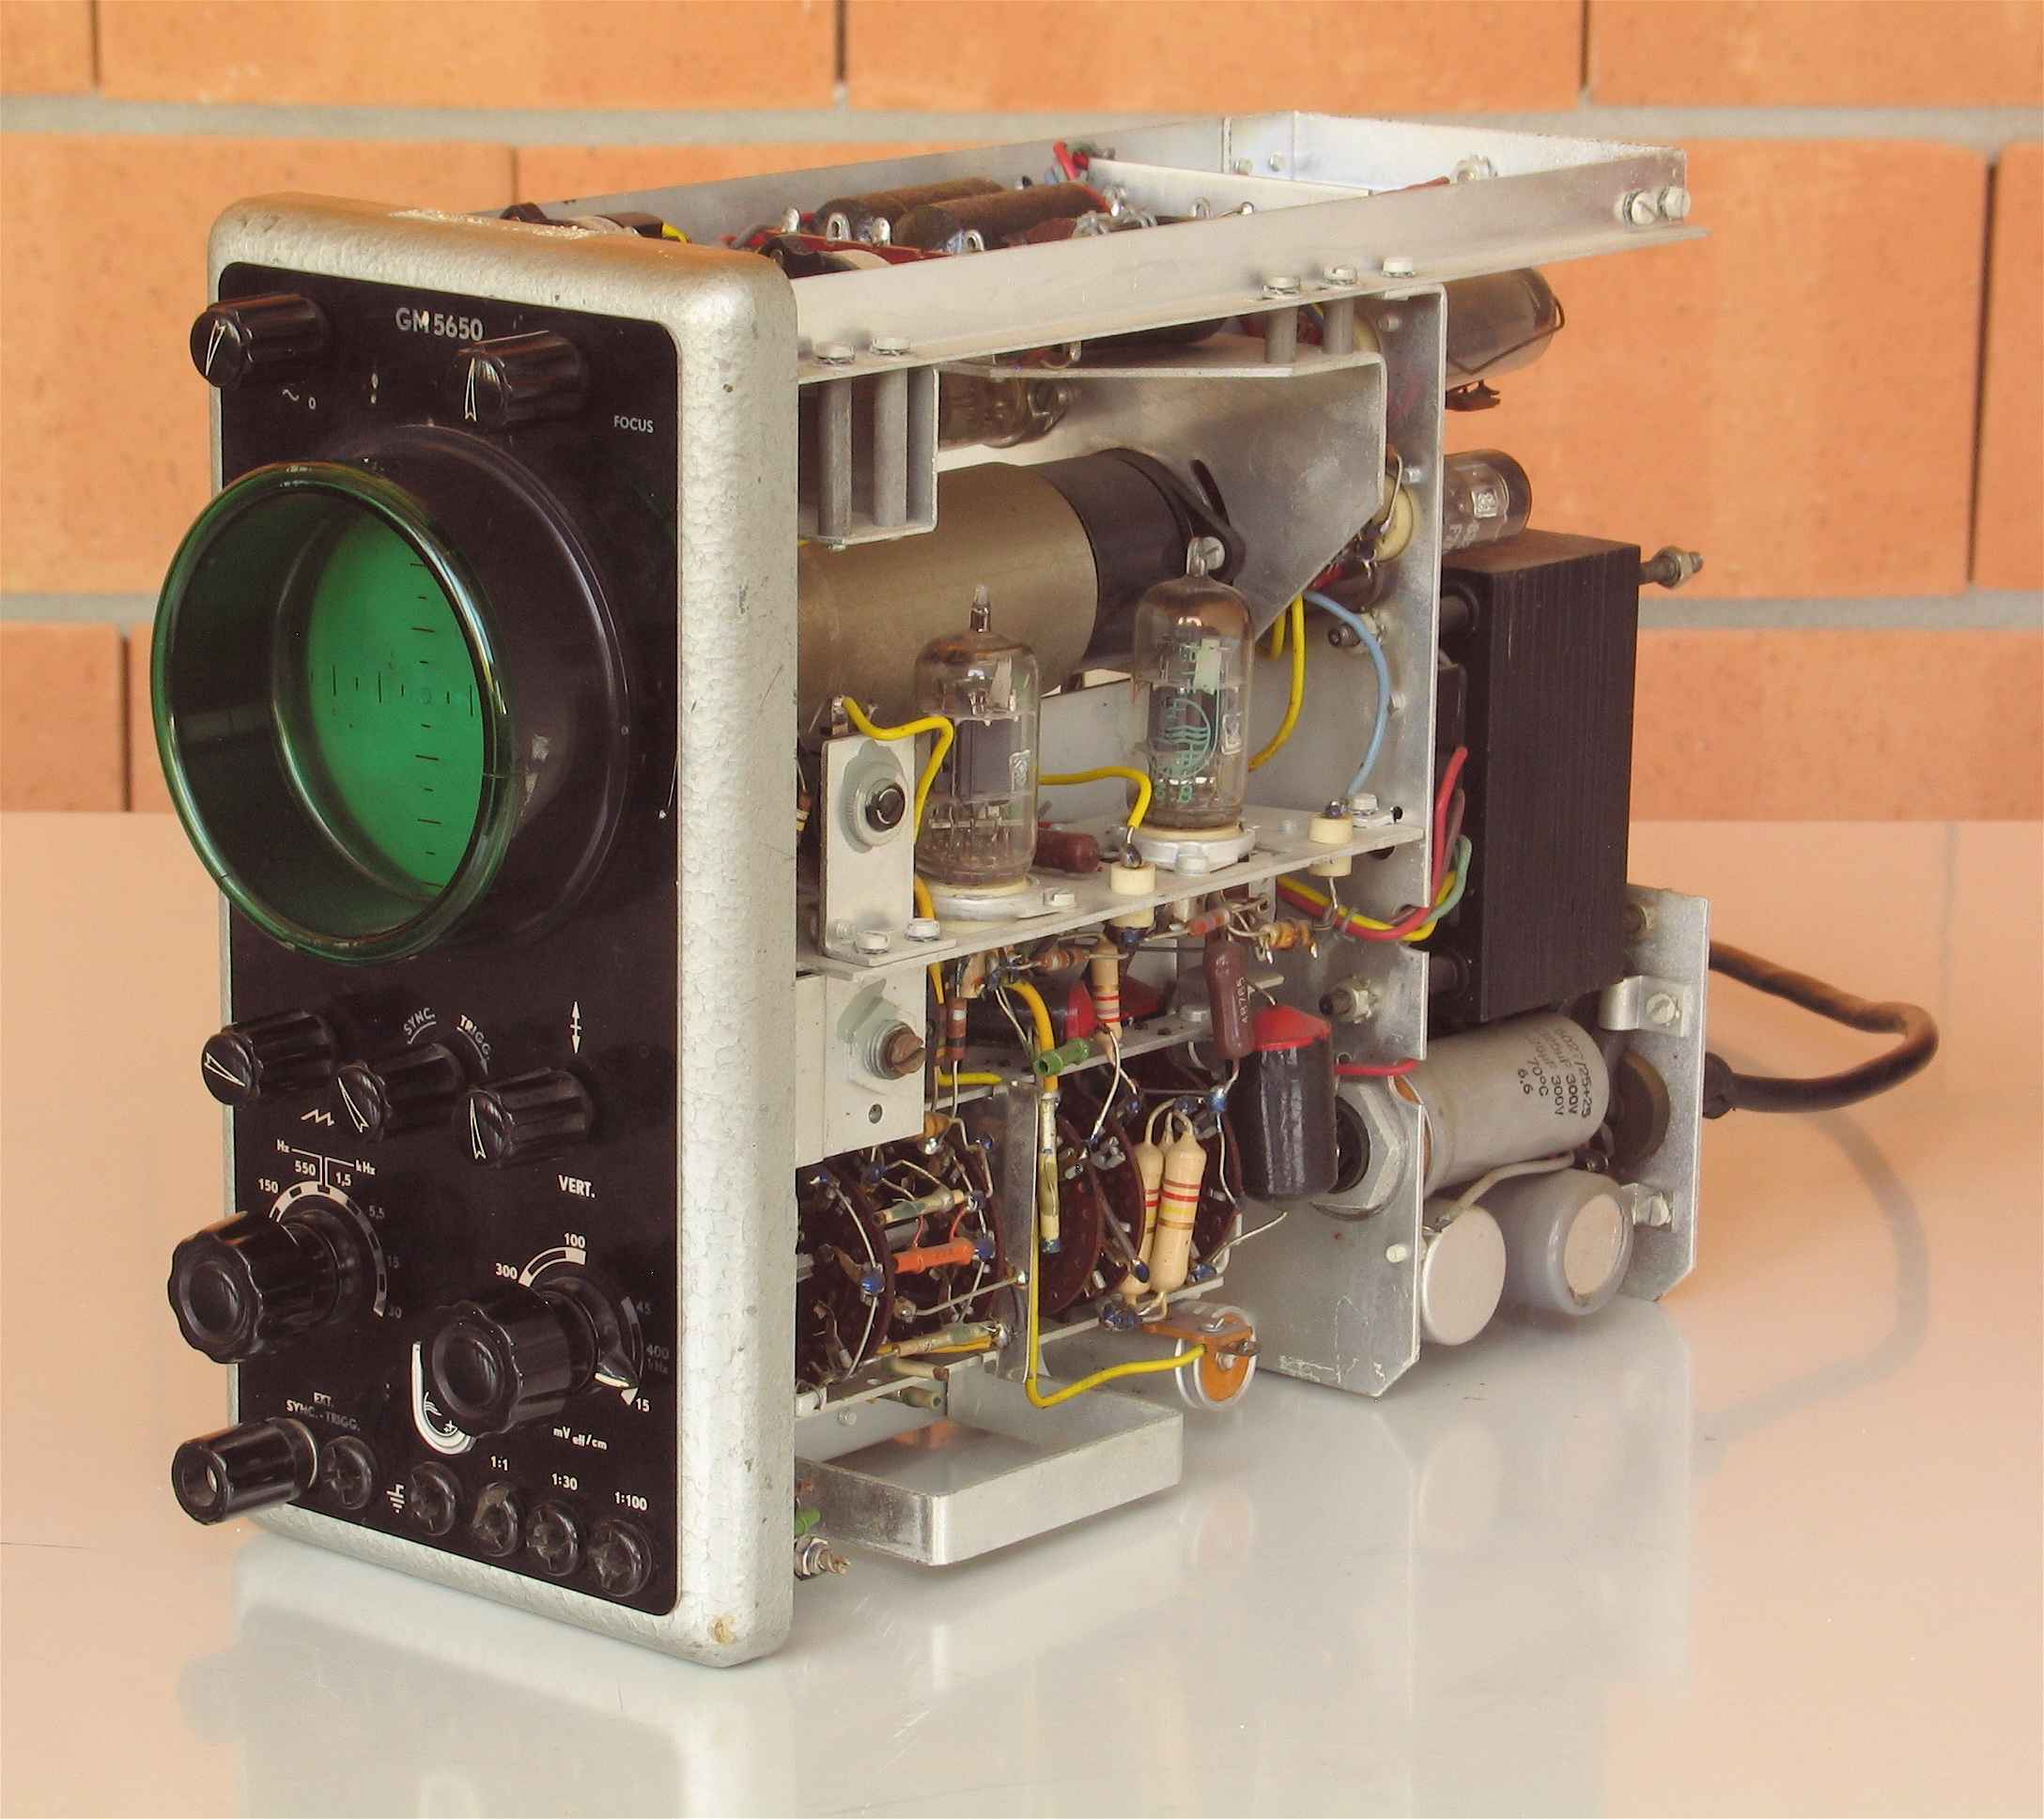 Oscilloscope à tube cathodique
(Philips GM 5650)